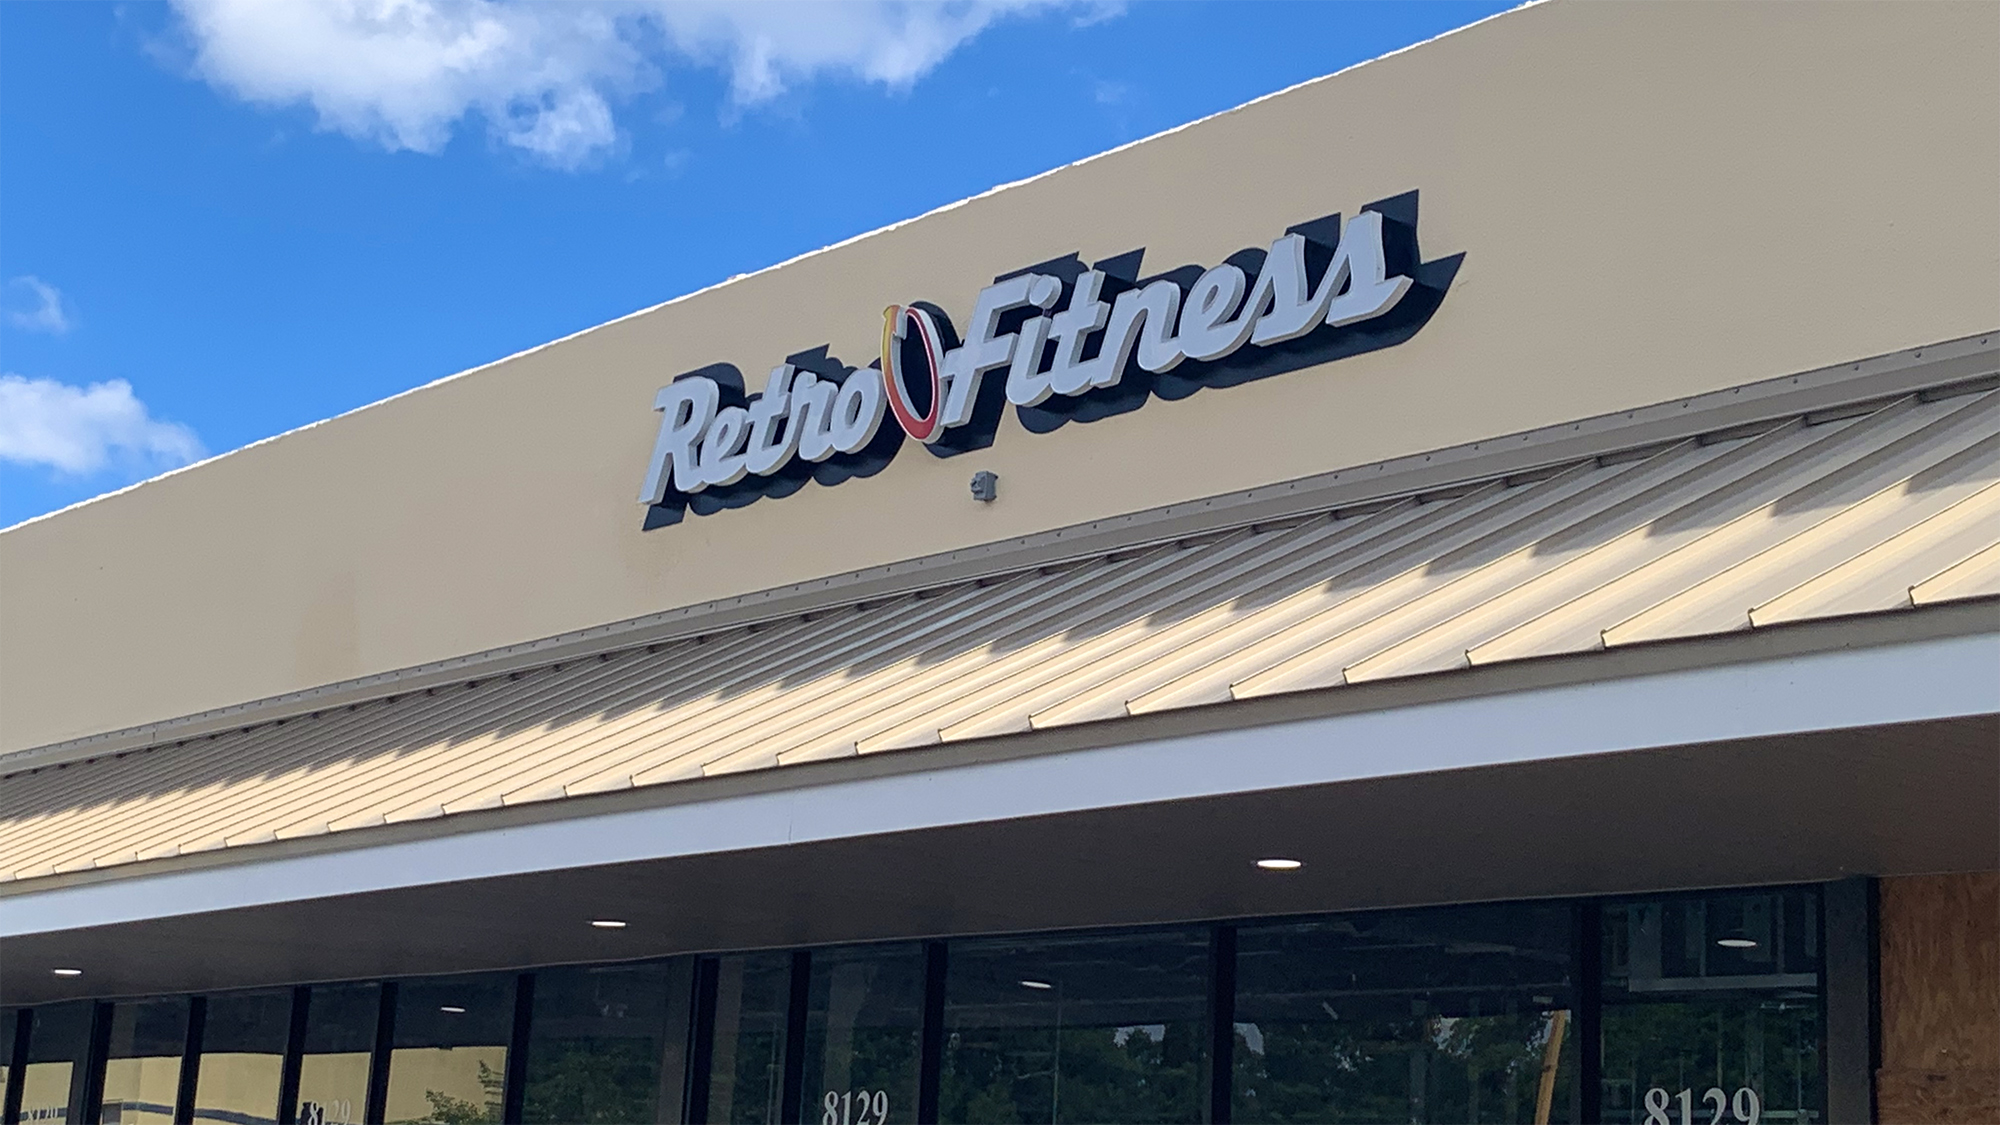 New Retro Fitness Location Coming to Tamarac